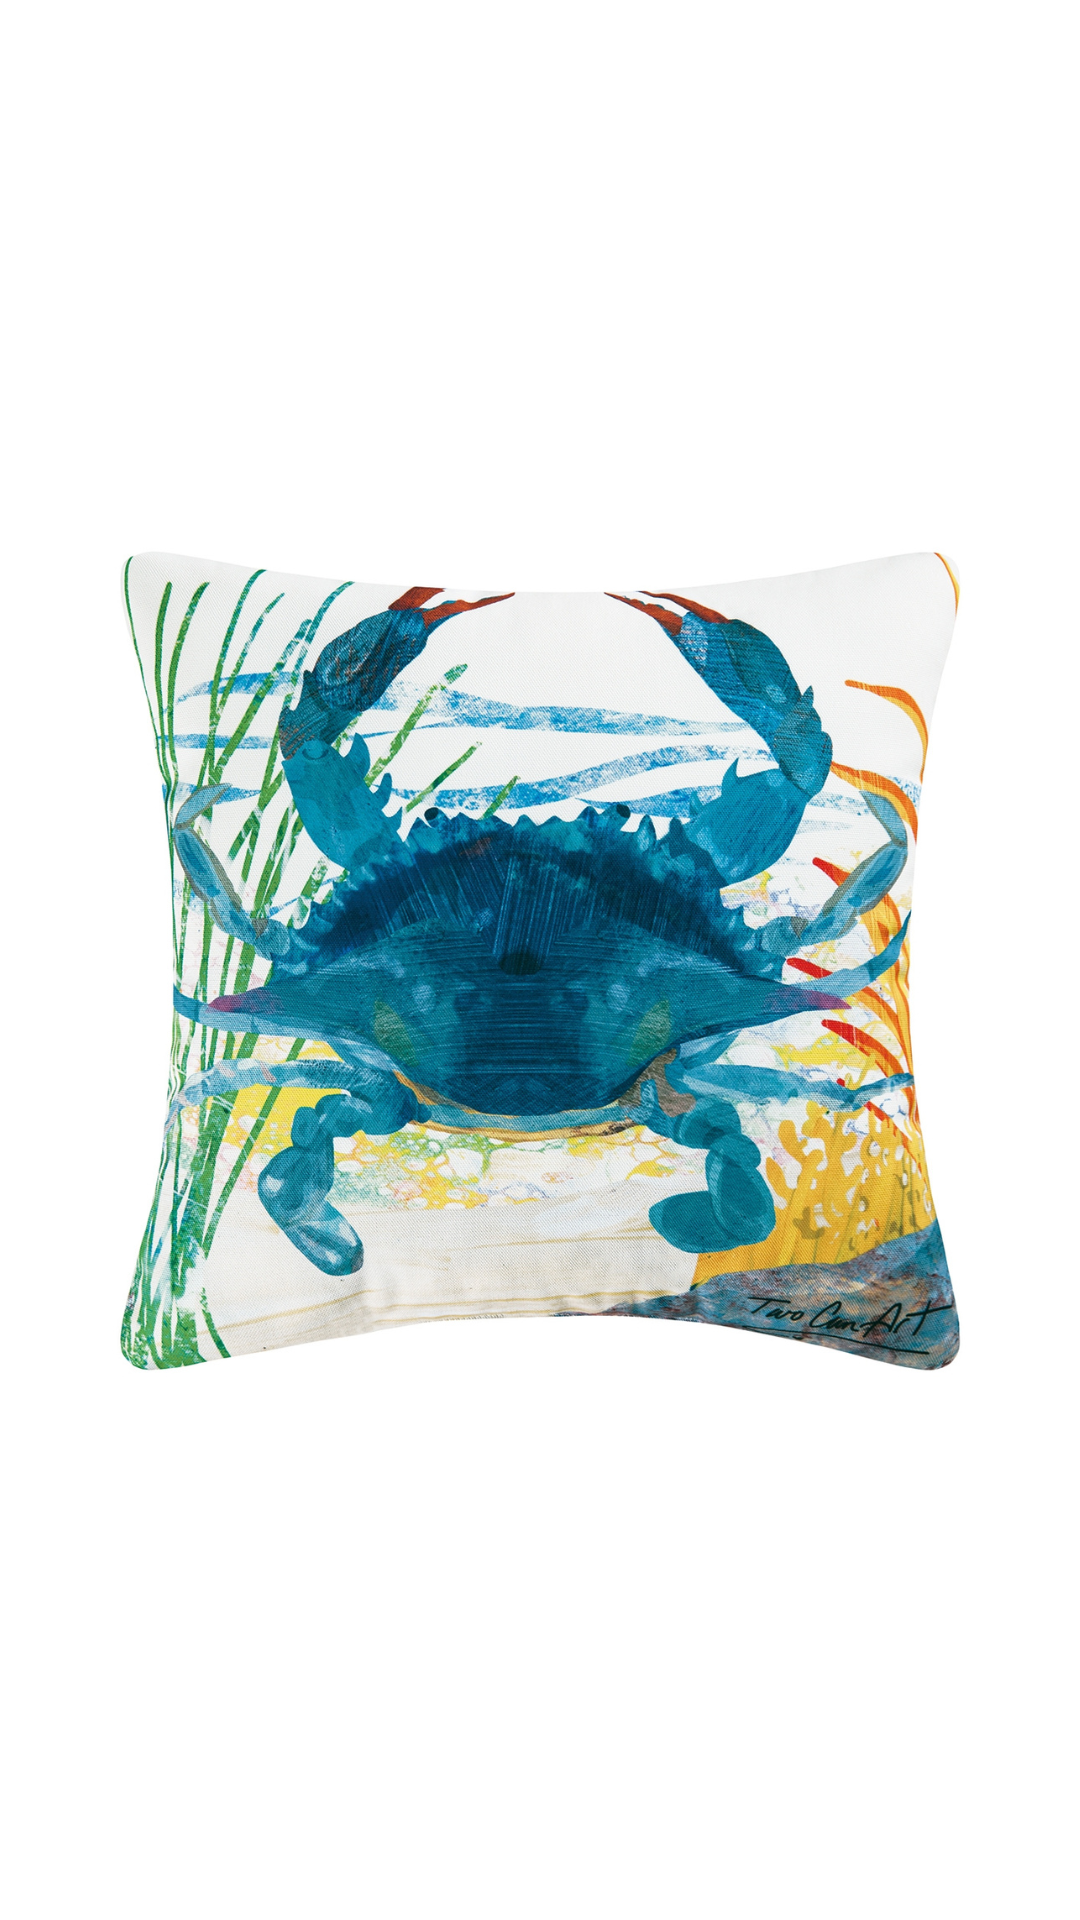 Brushed Blue Crab Pillow